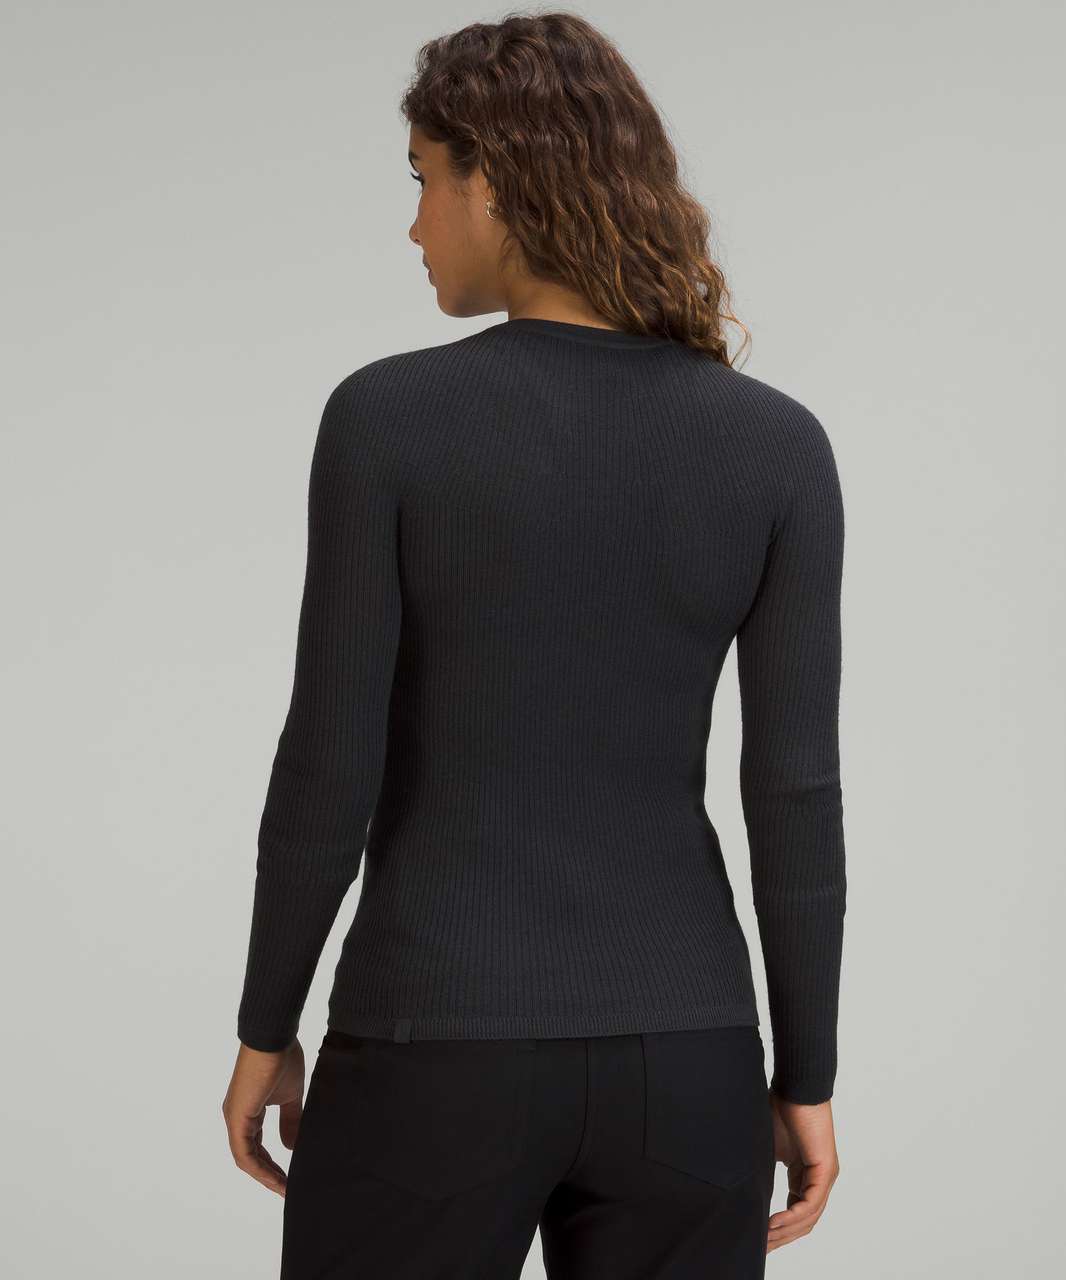 Lululemon Merino Wool Long Sleeve Light Sweater - Graphite Grey